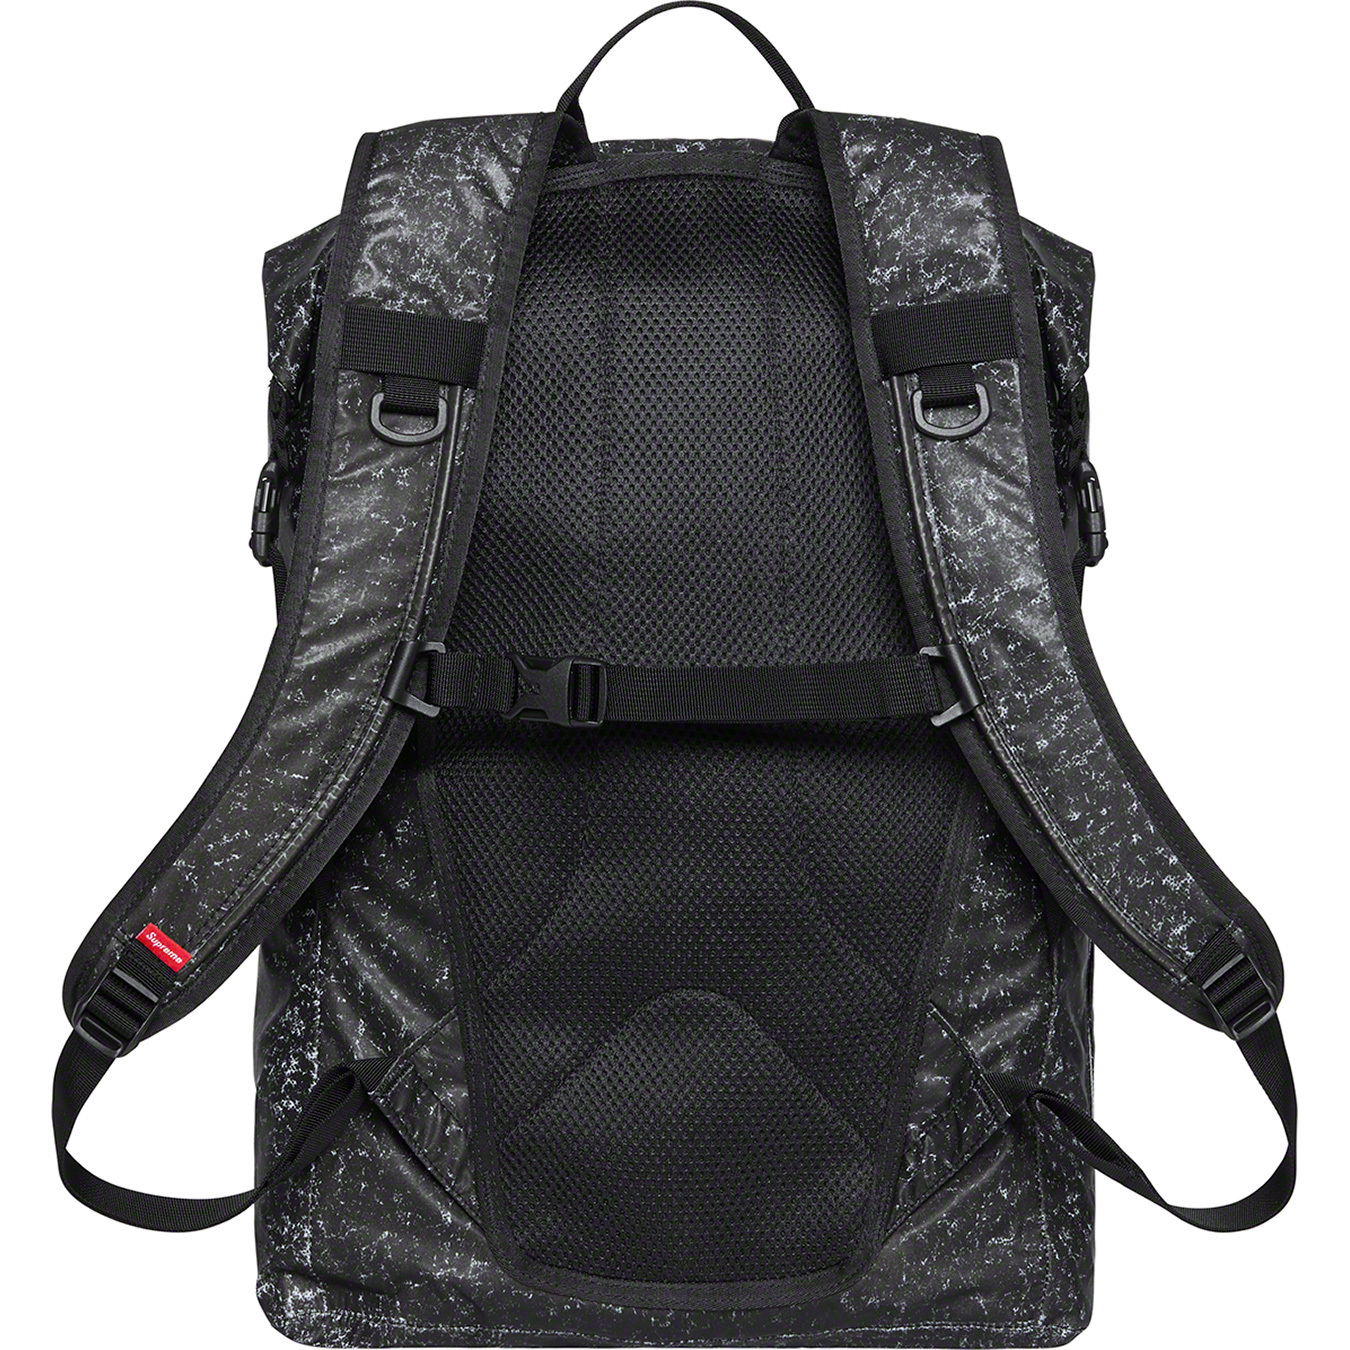 Supreme Waterproof Reflective Speckled Backpack